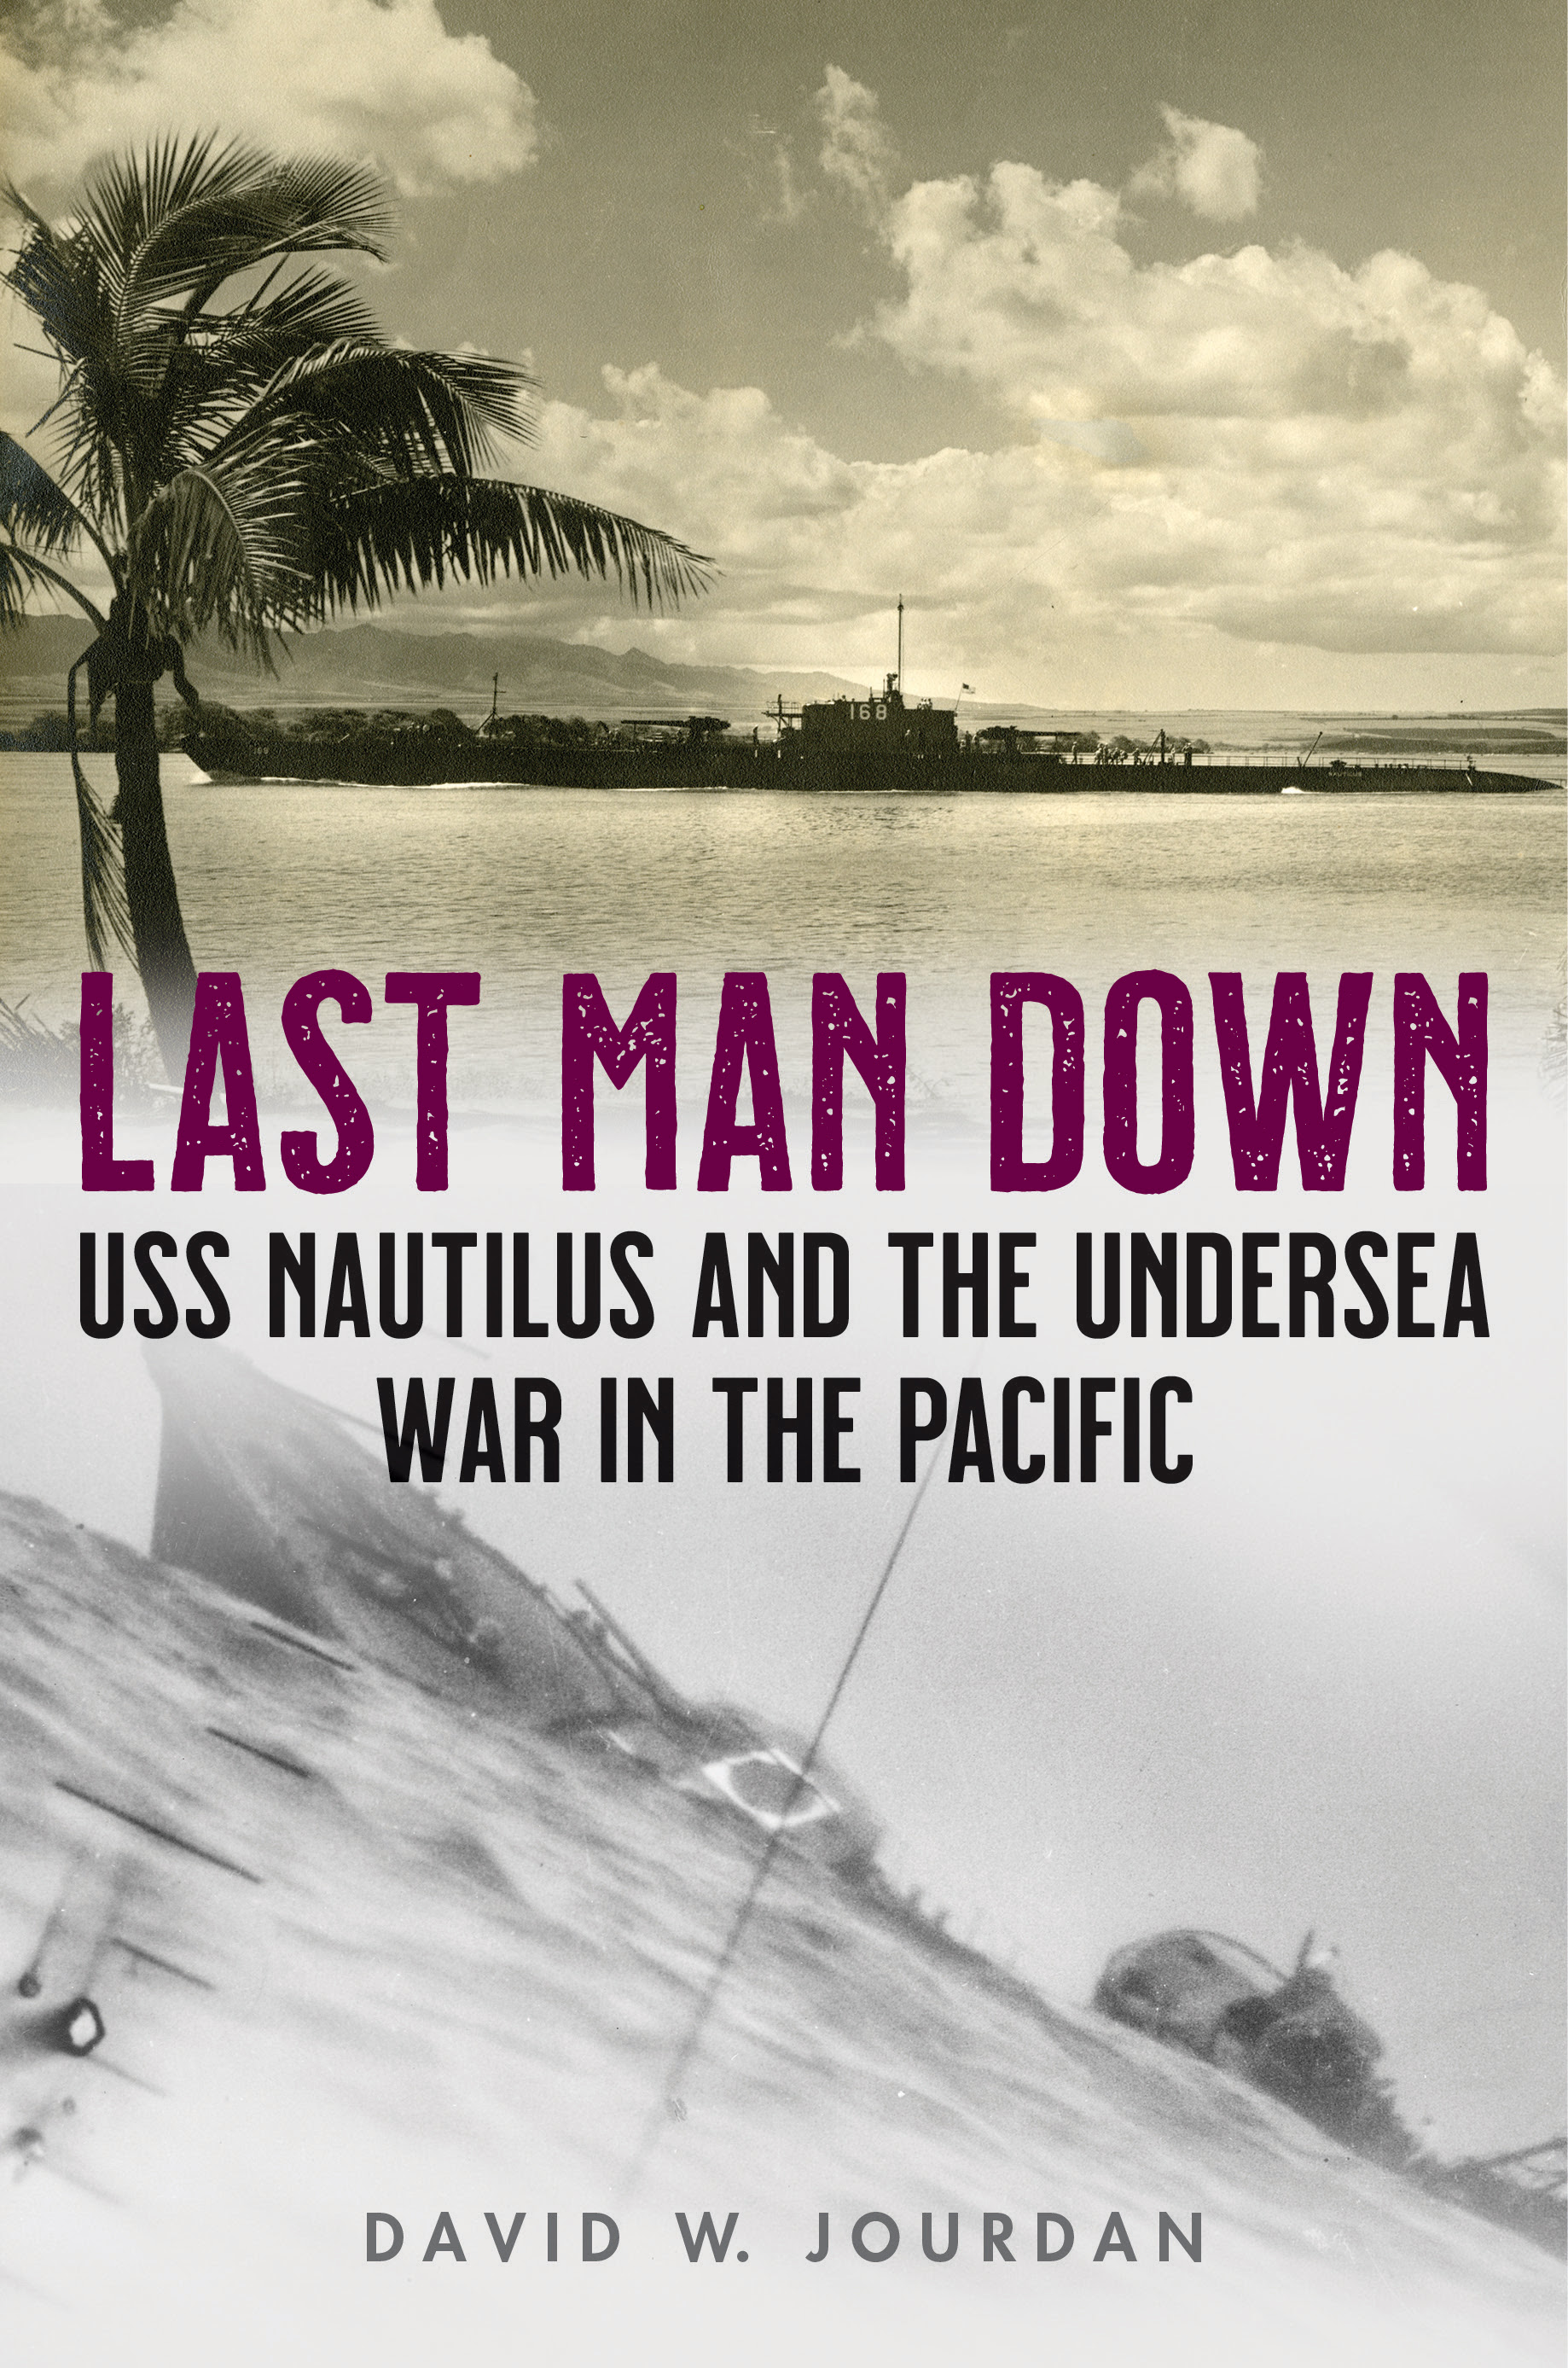 Cover of book Last Man Down by David W. Jourdan